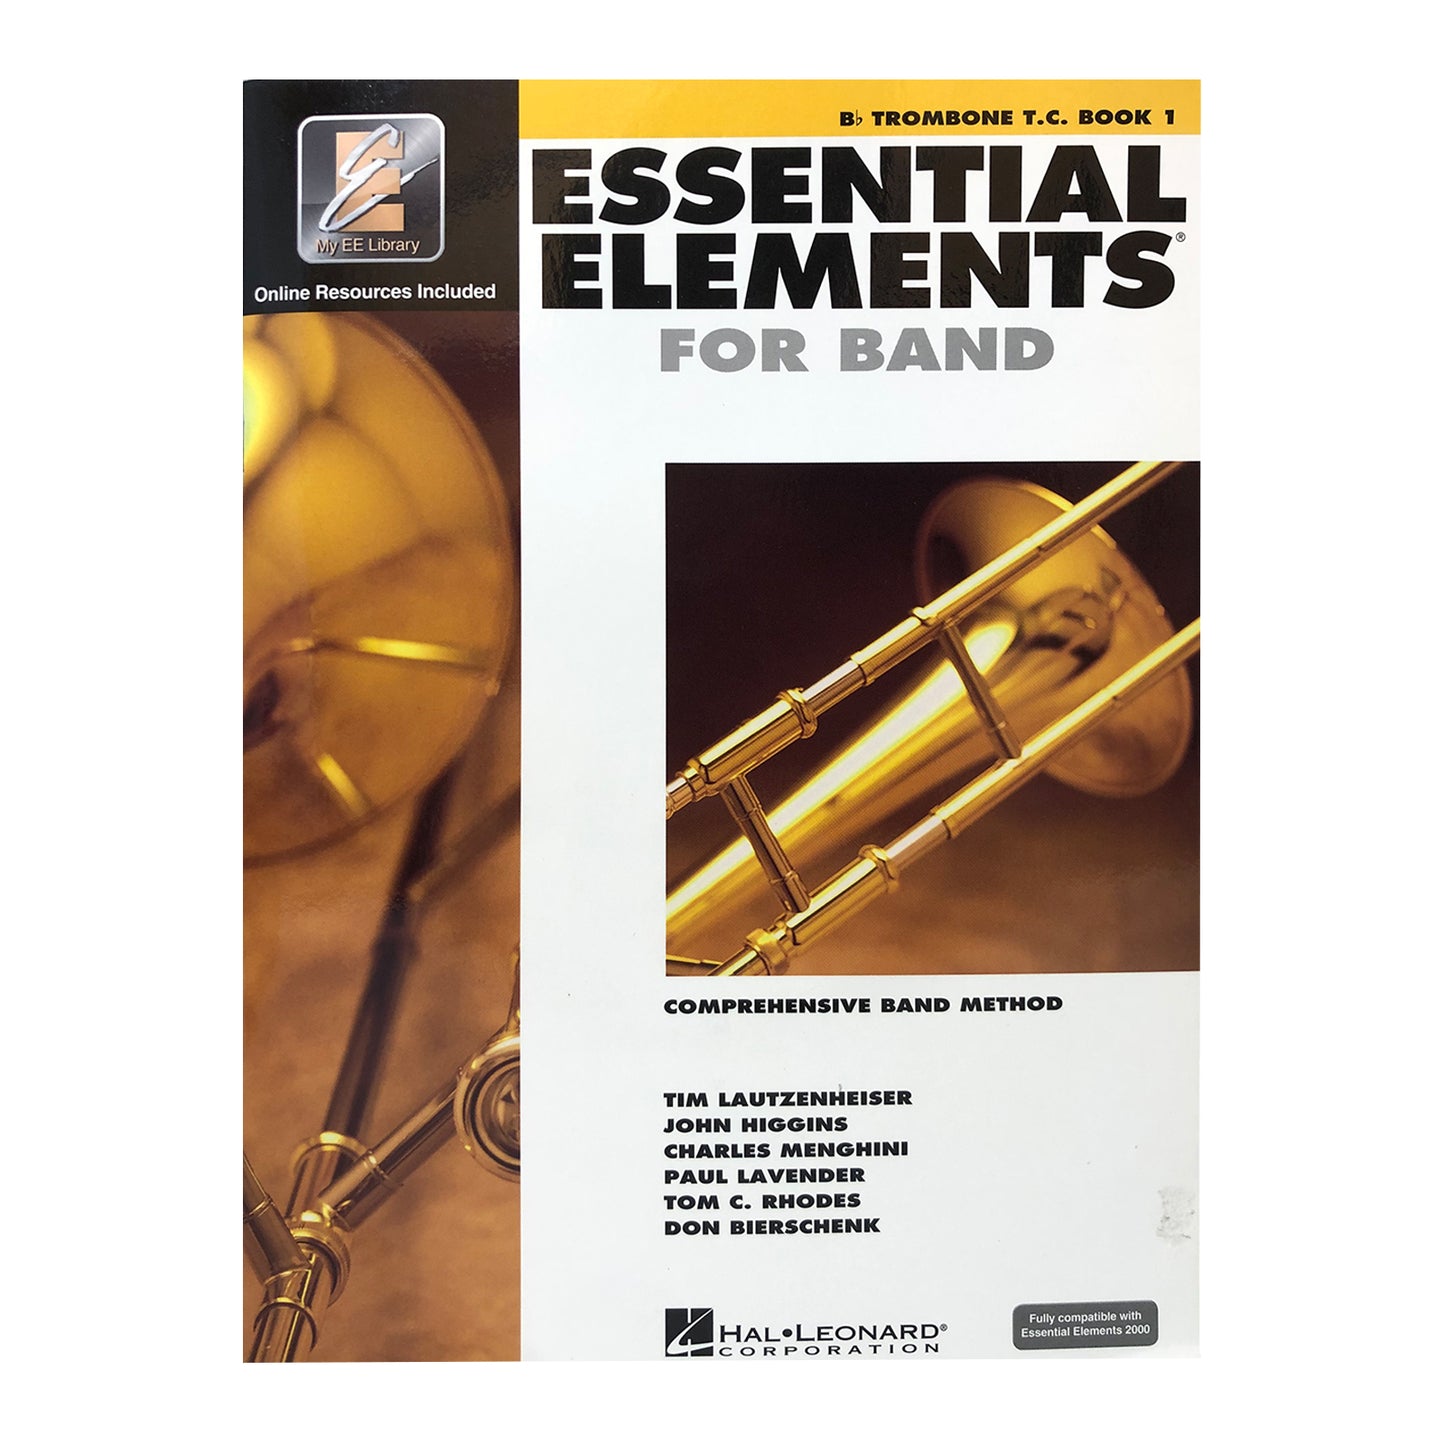 Essential Elements Trombone T.C. Book 1